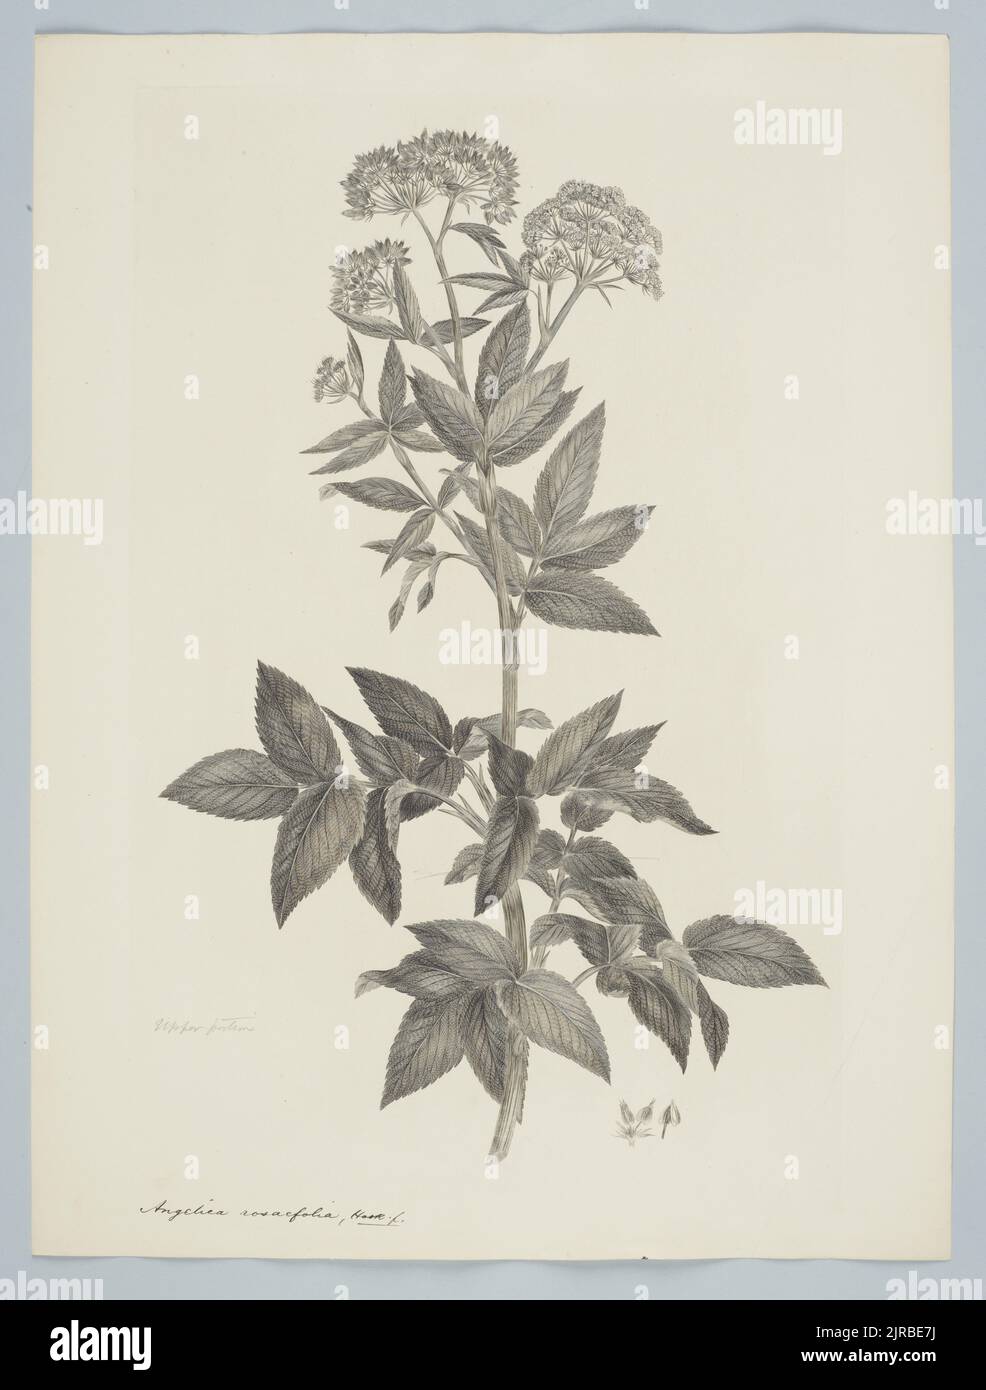 Scandia rosaefolia (Hooker) Dawson, 1895, United Kingdom, by Sydney Parkinson. Gift of the British Museum, 1895. Stock Photo